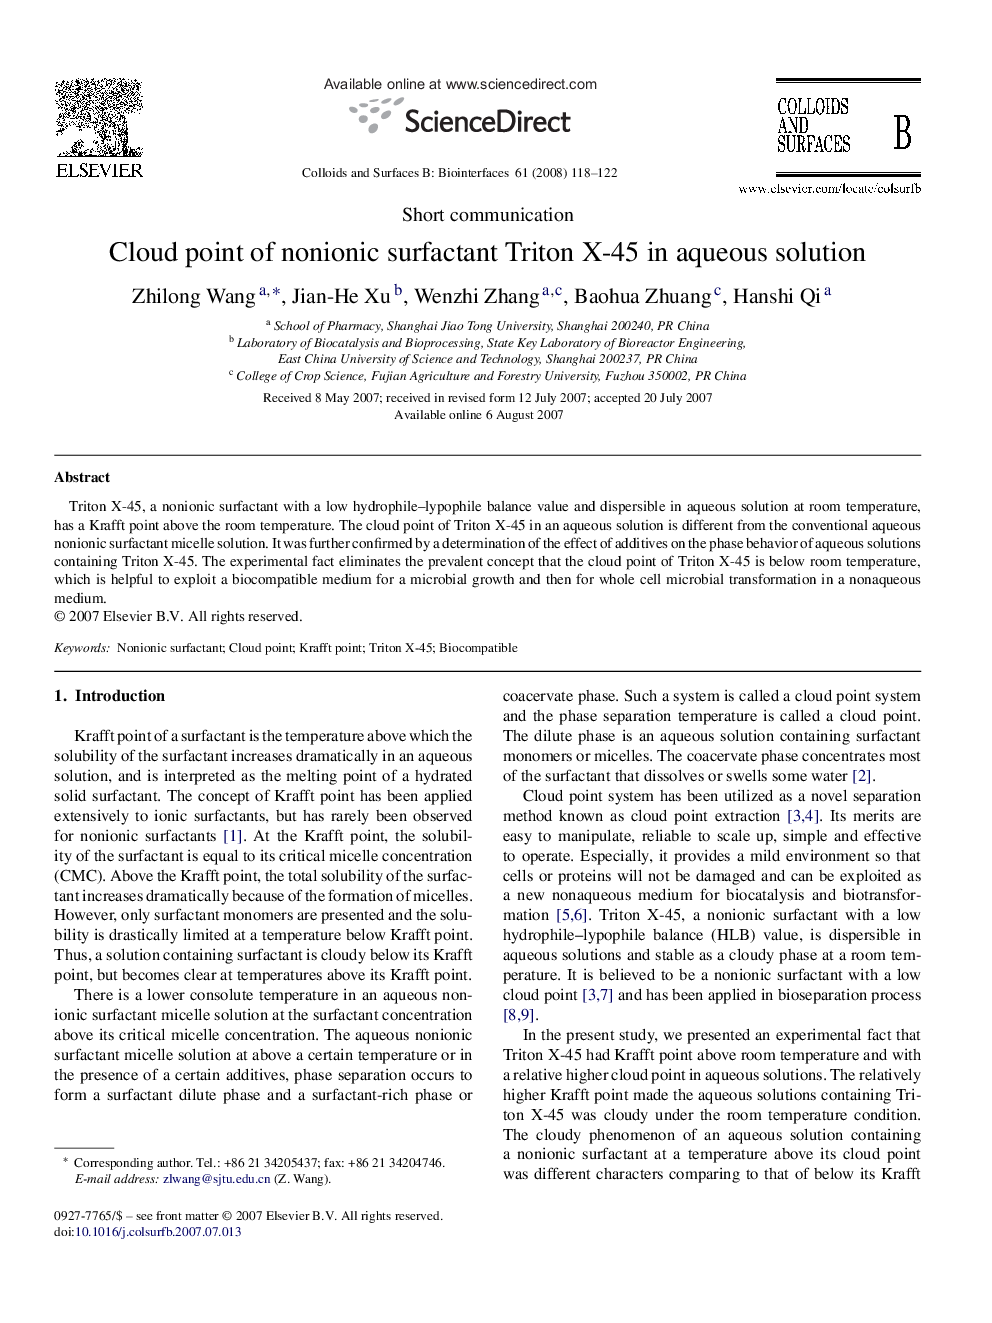 Cloud point of nonionic surfactant Triton X-45 in aqueous solution